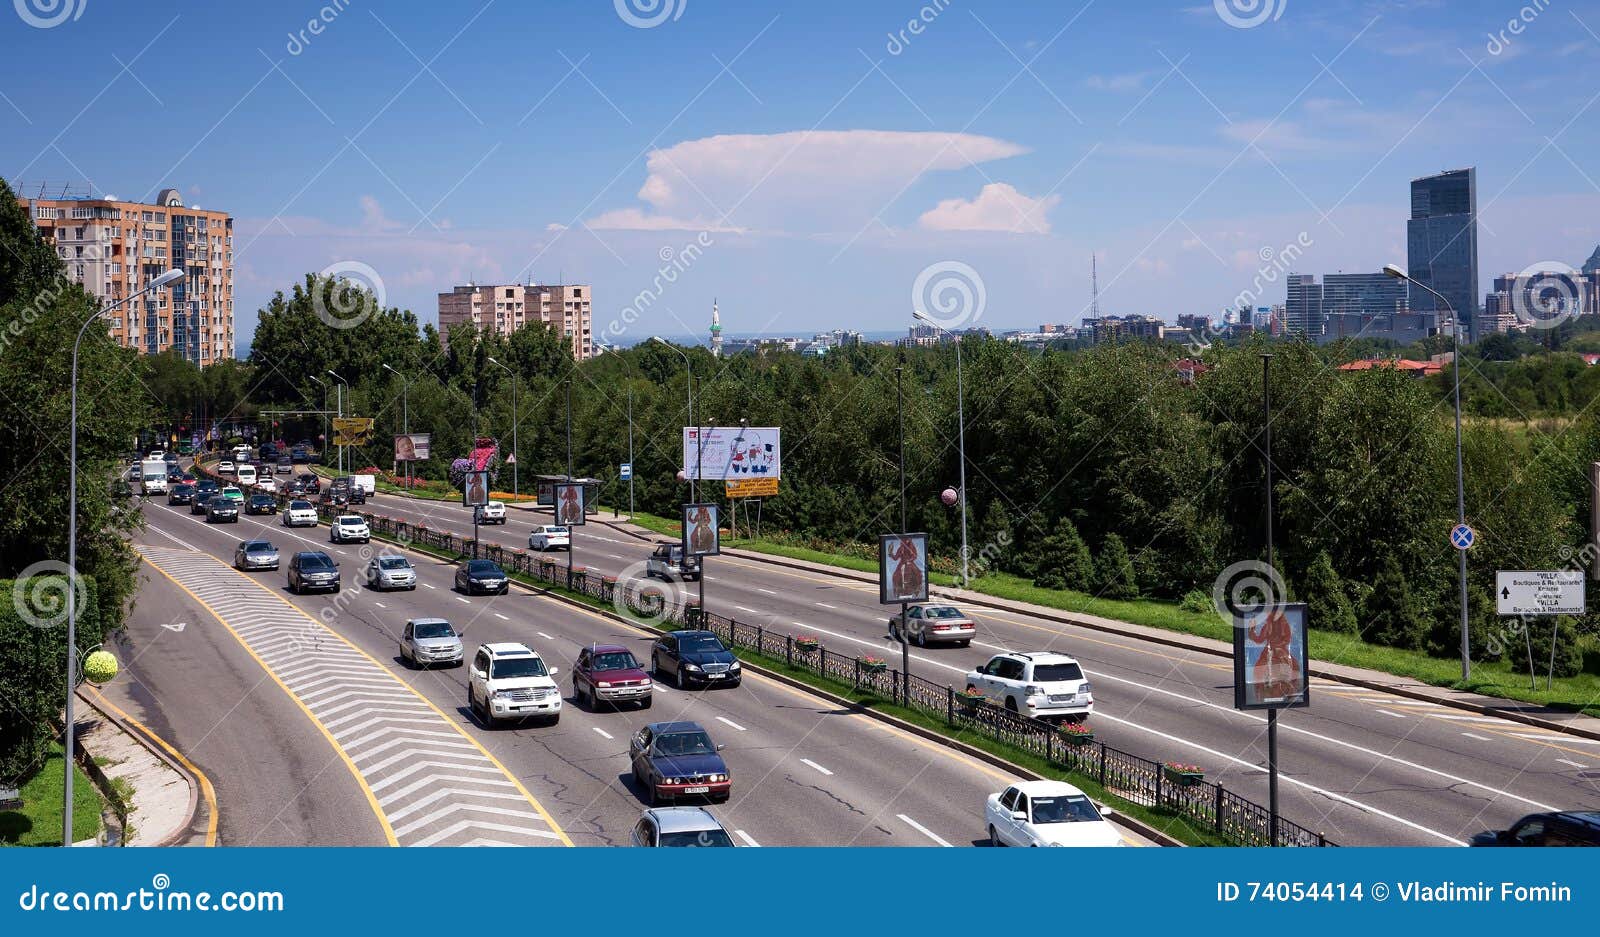 Almaty city. editorial stock image. Image of kazakhstan - 74054414